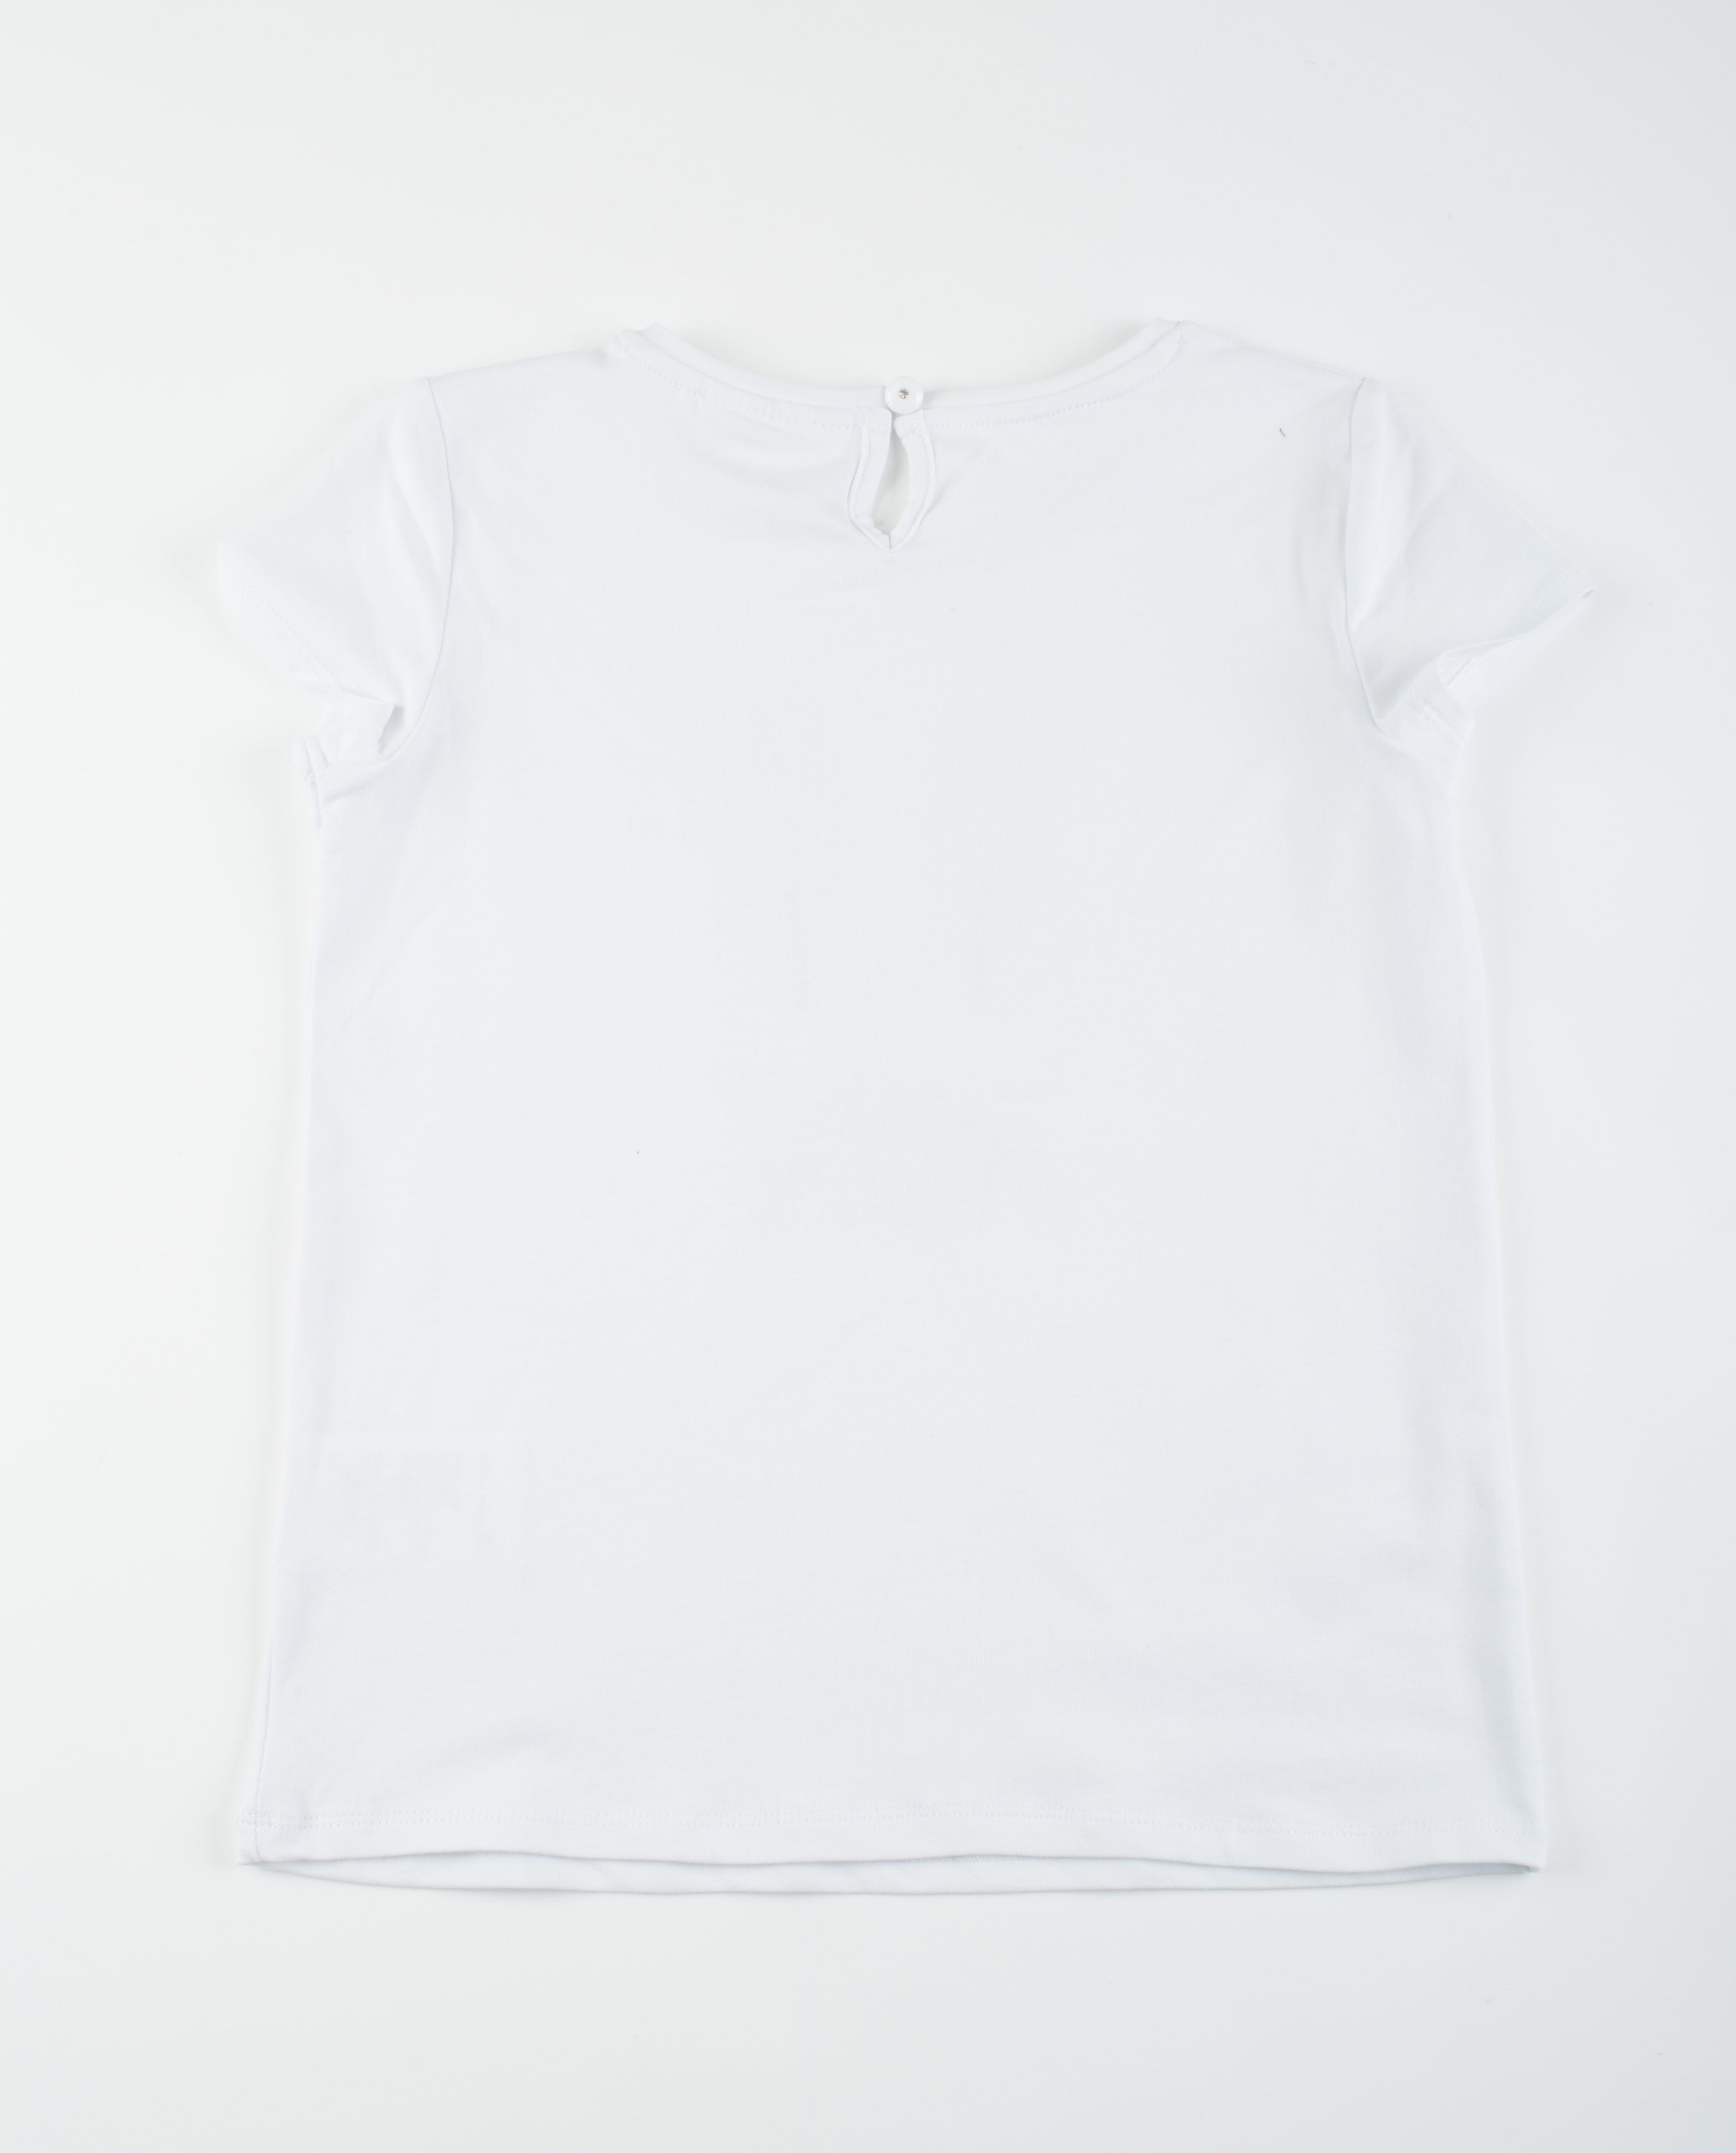 T-shirts - Wit T-shirt met versierde print